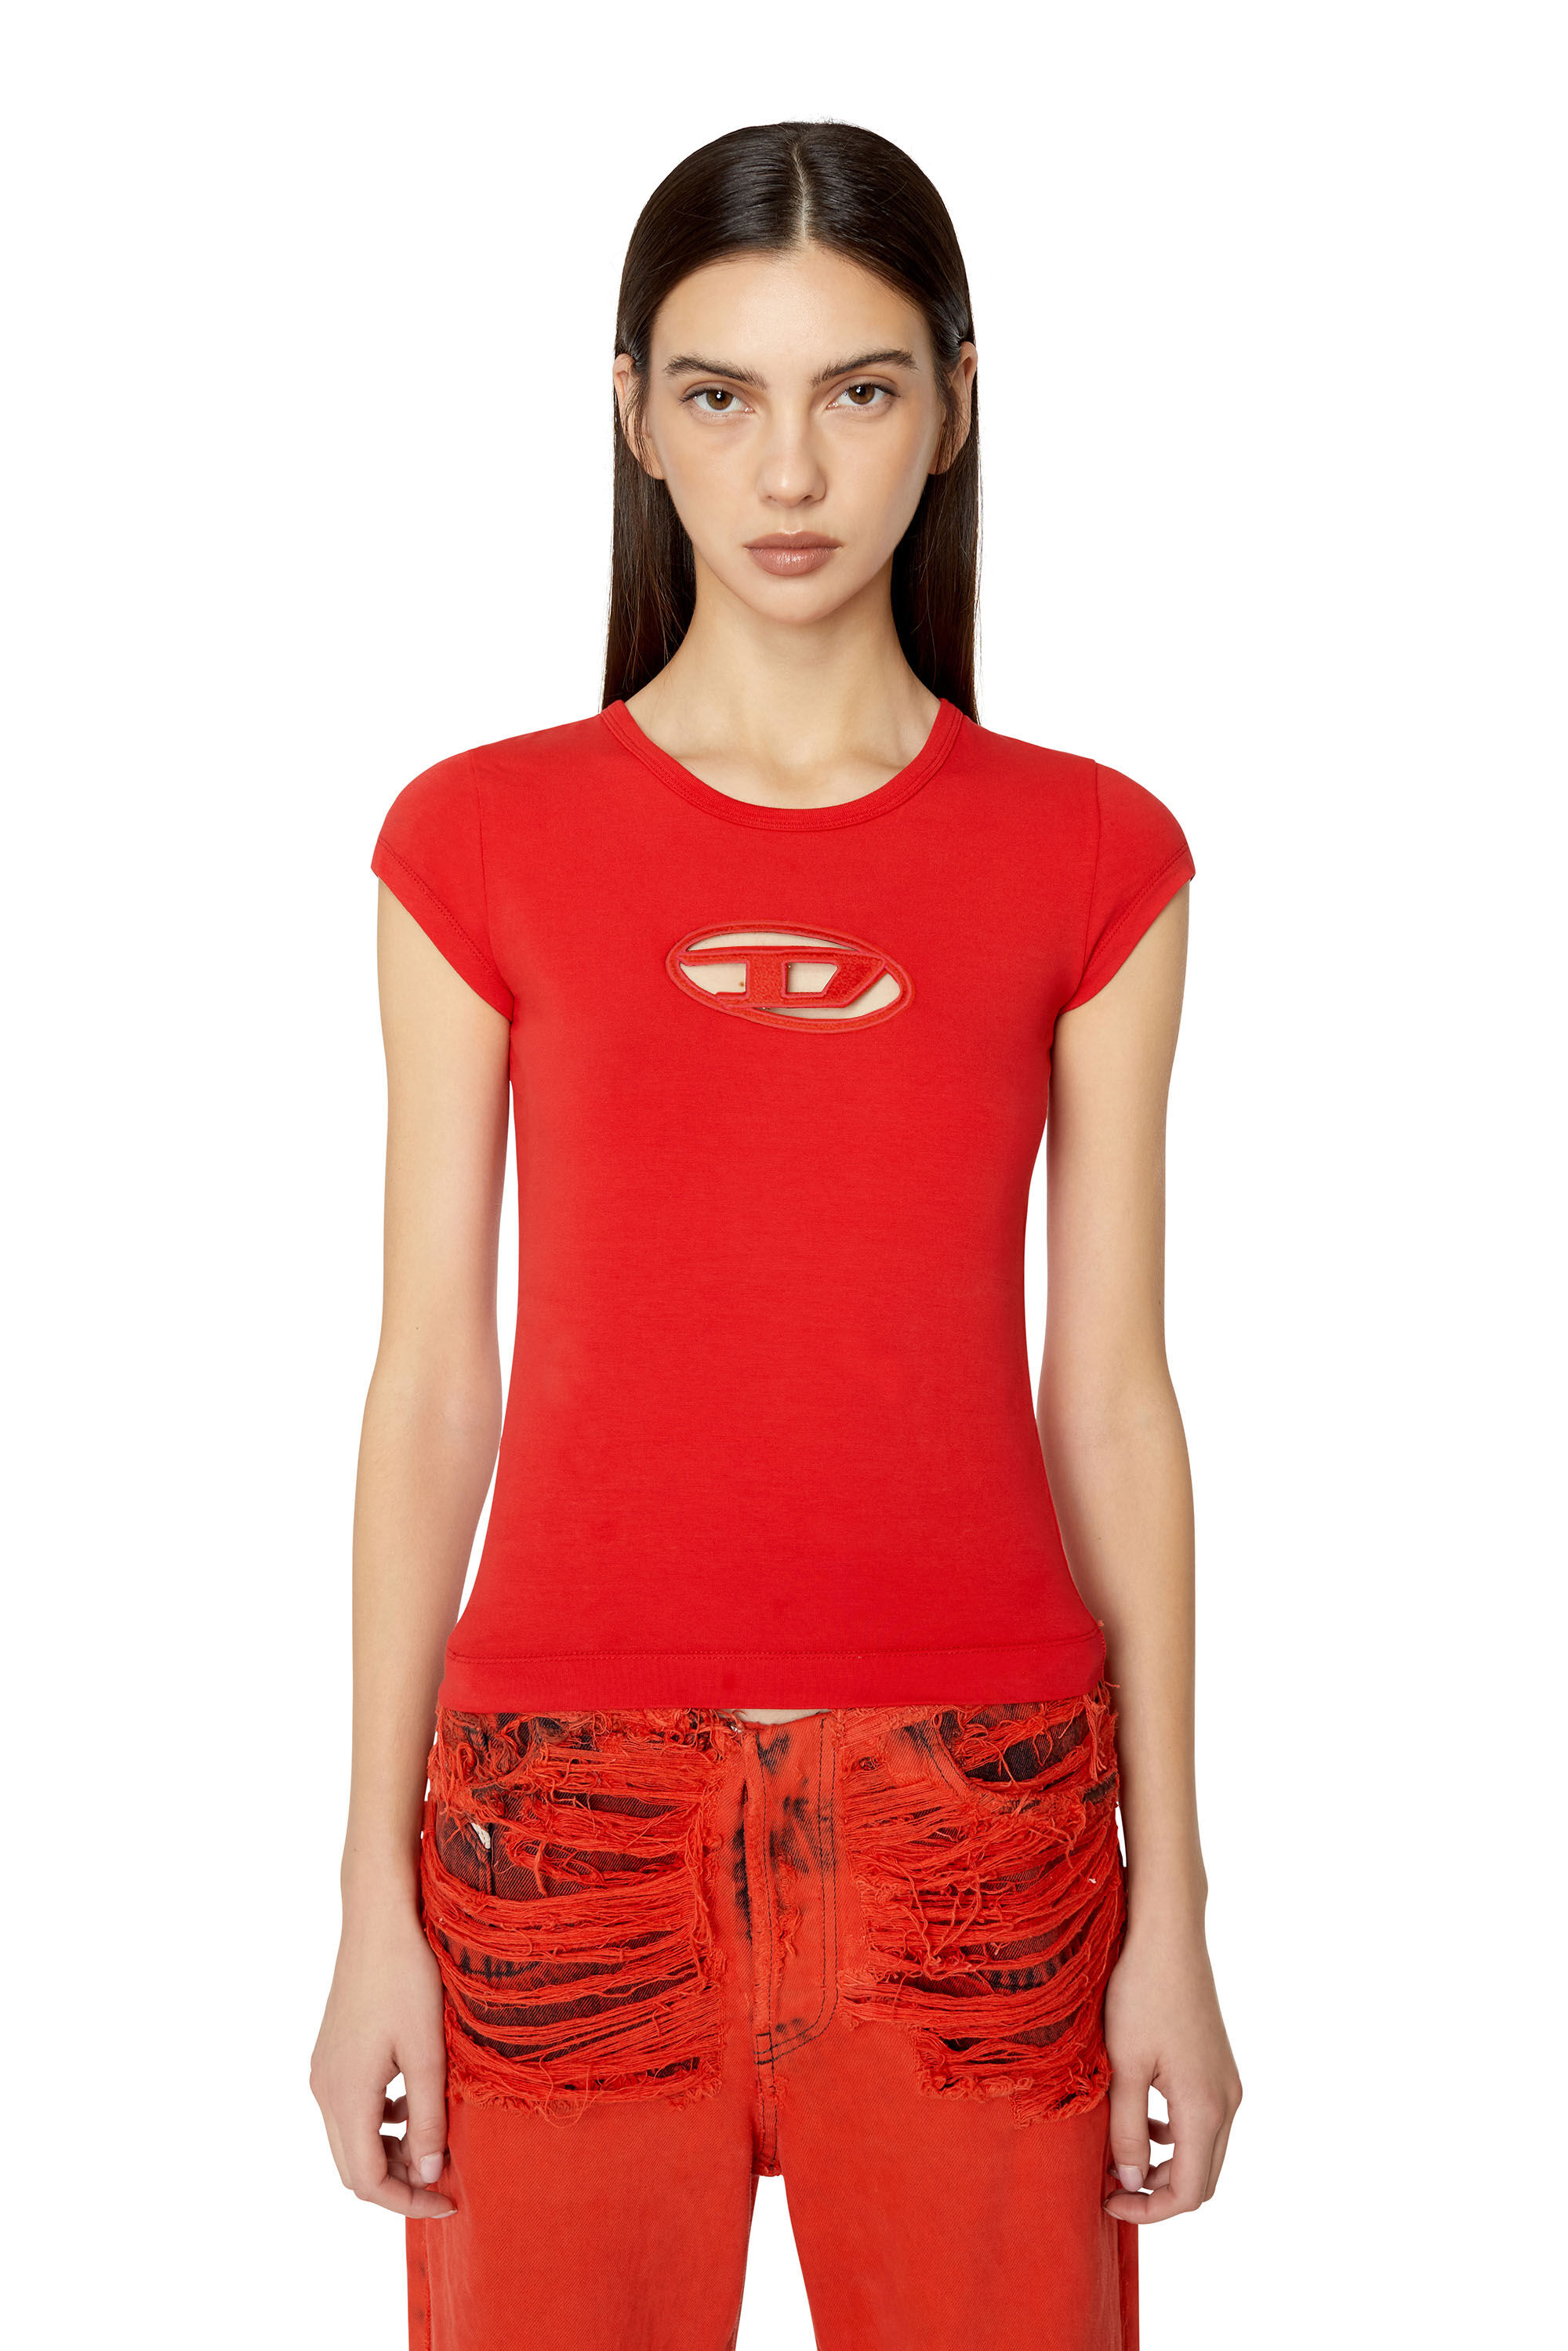 T-ANGIE Woman: T-shirt with peekaboo logo | Diesel